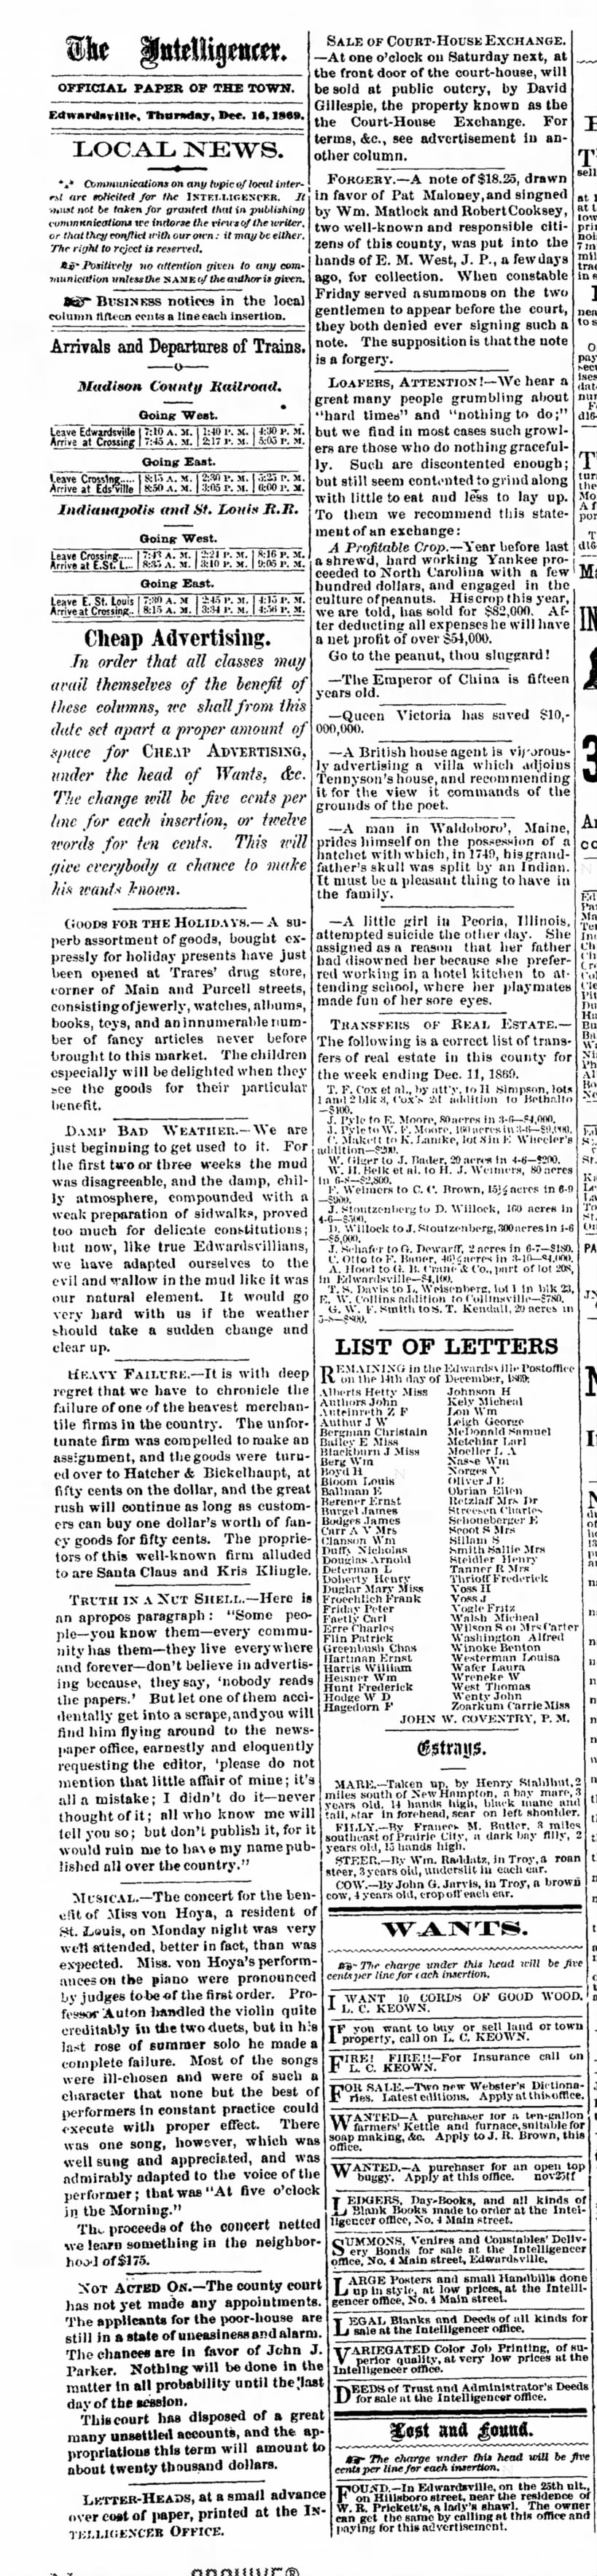 Edwardsville Inteligencer 1869 News about the Area